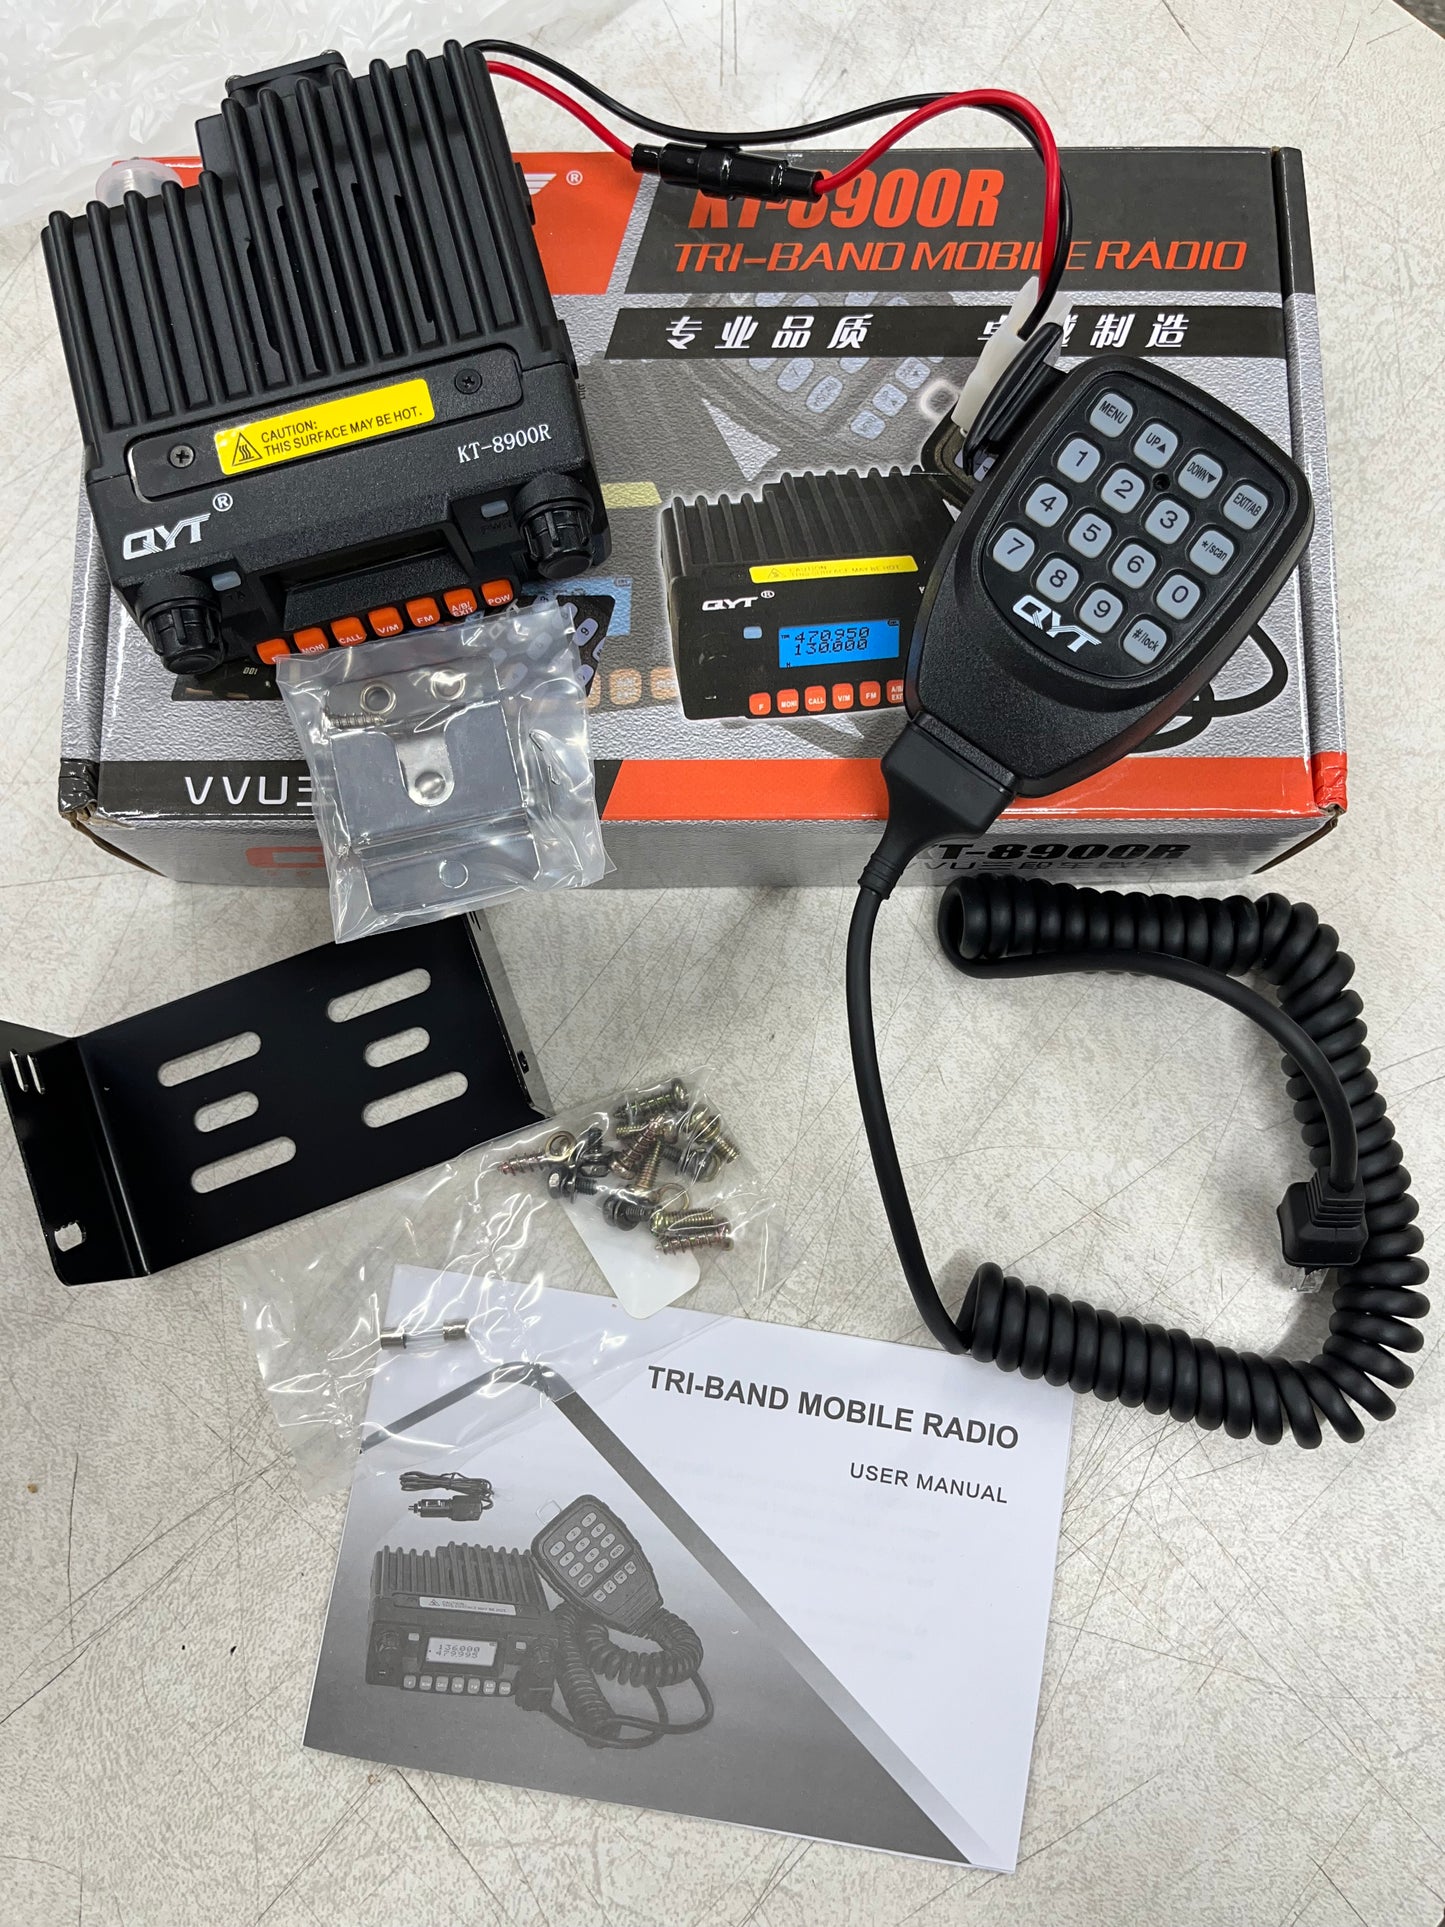 Qyt KT-8900R 25W Tri-Band Mobile Transceiver Dual Watch Ham Radio VHF/UHF